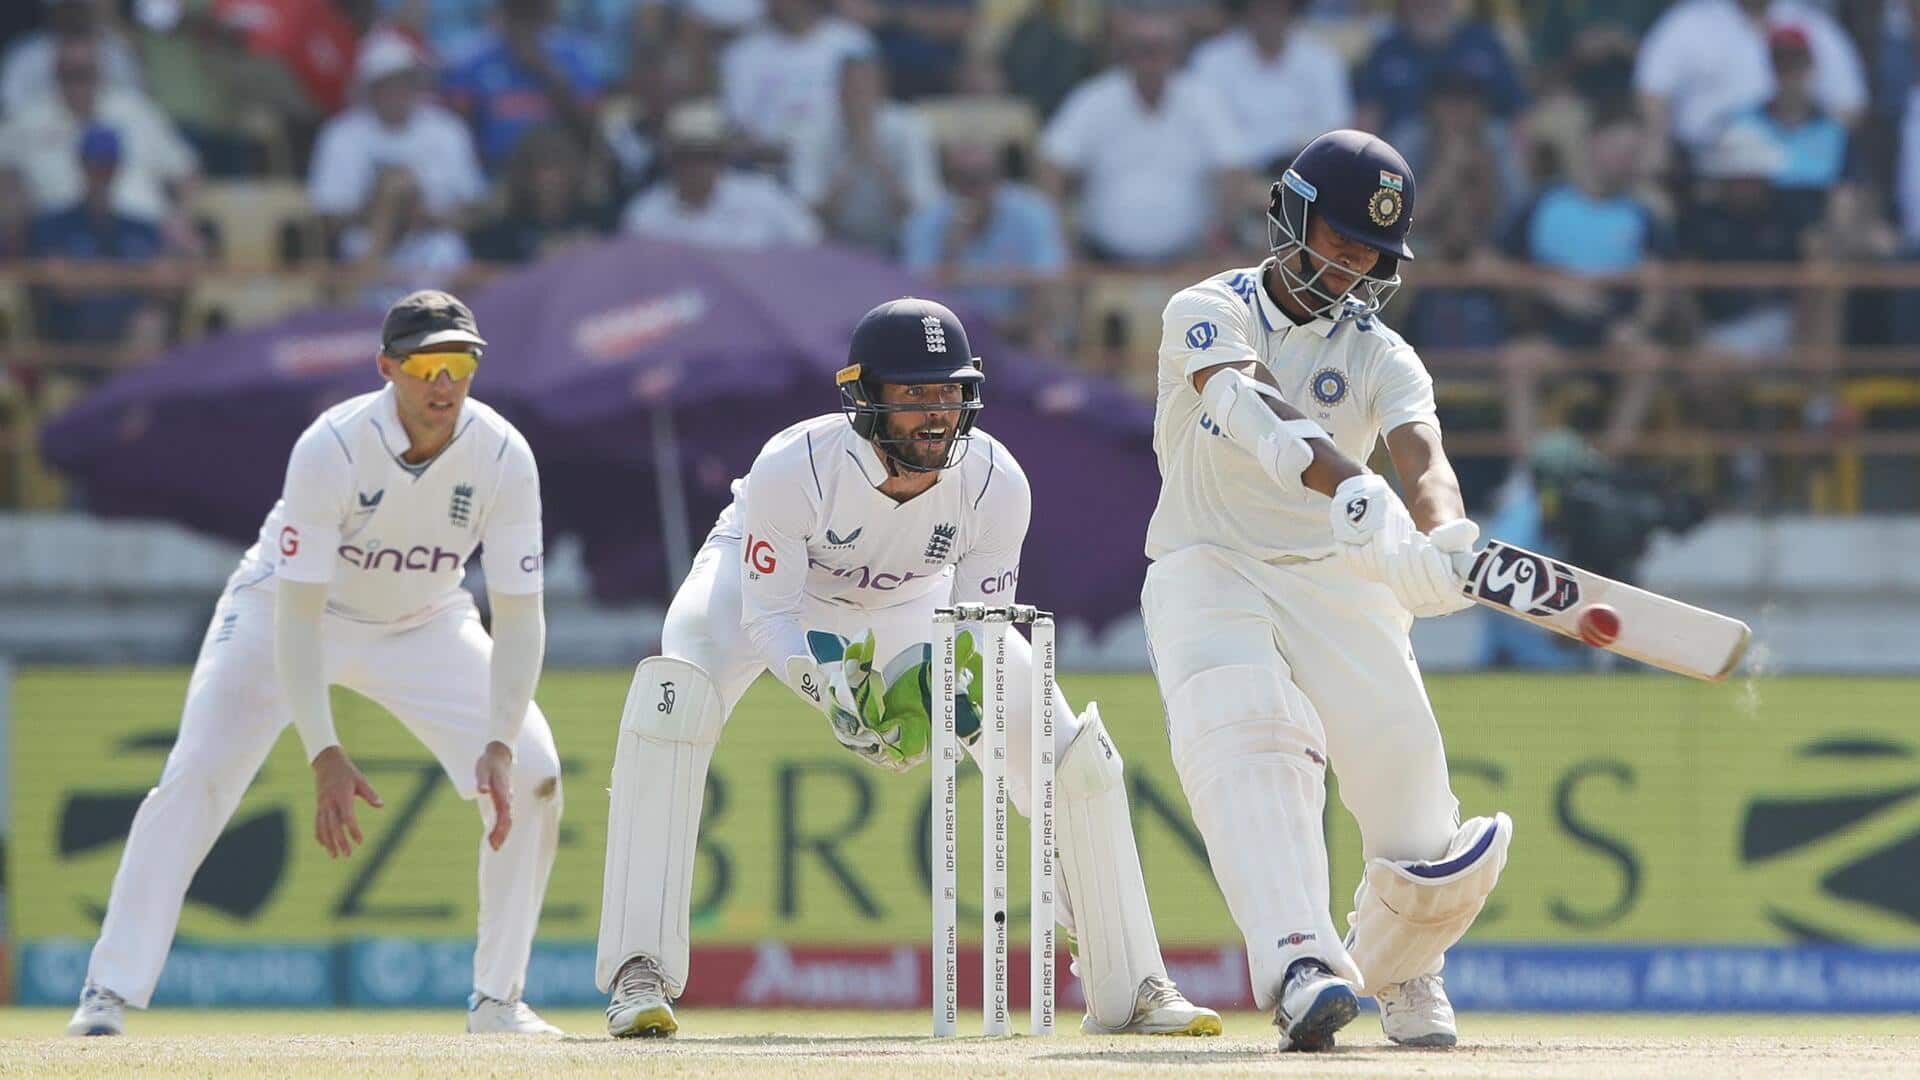 Yashasvi Jaiswal clocks his second Test ton against England: Stats